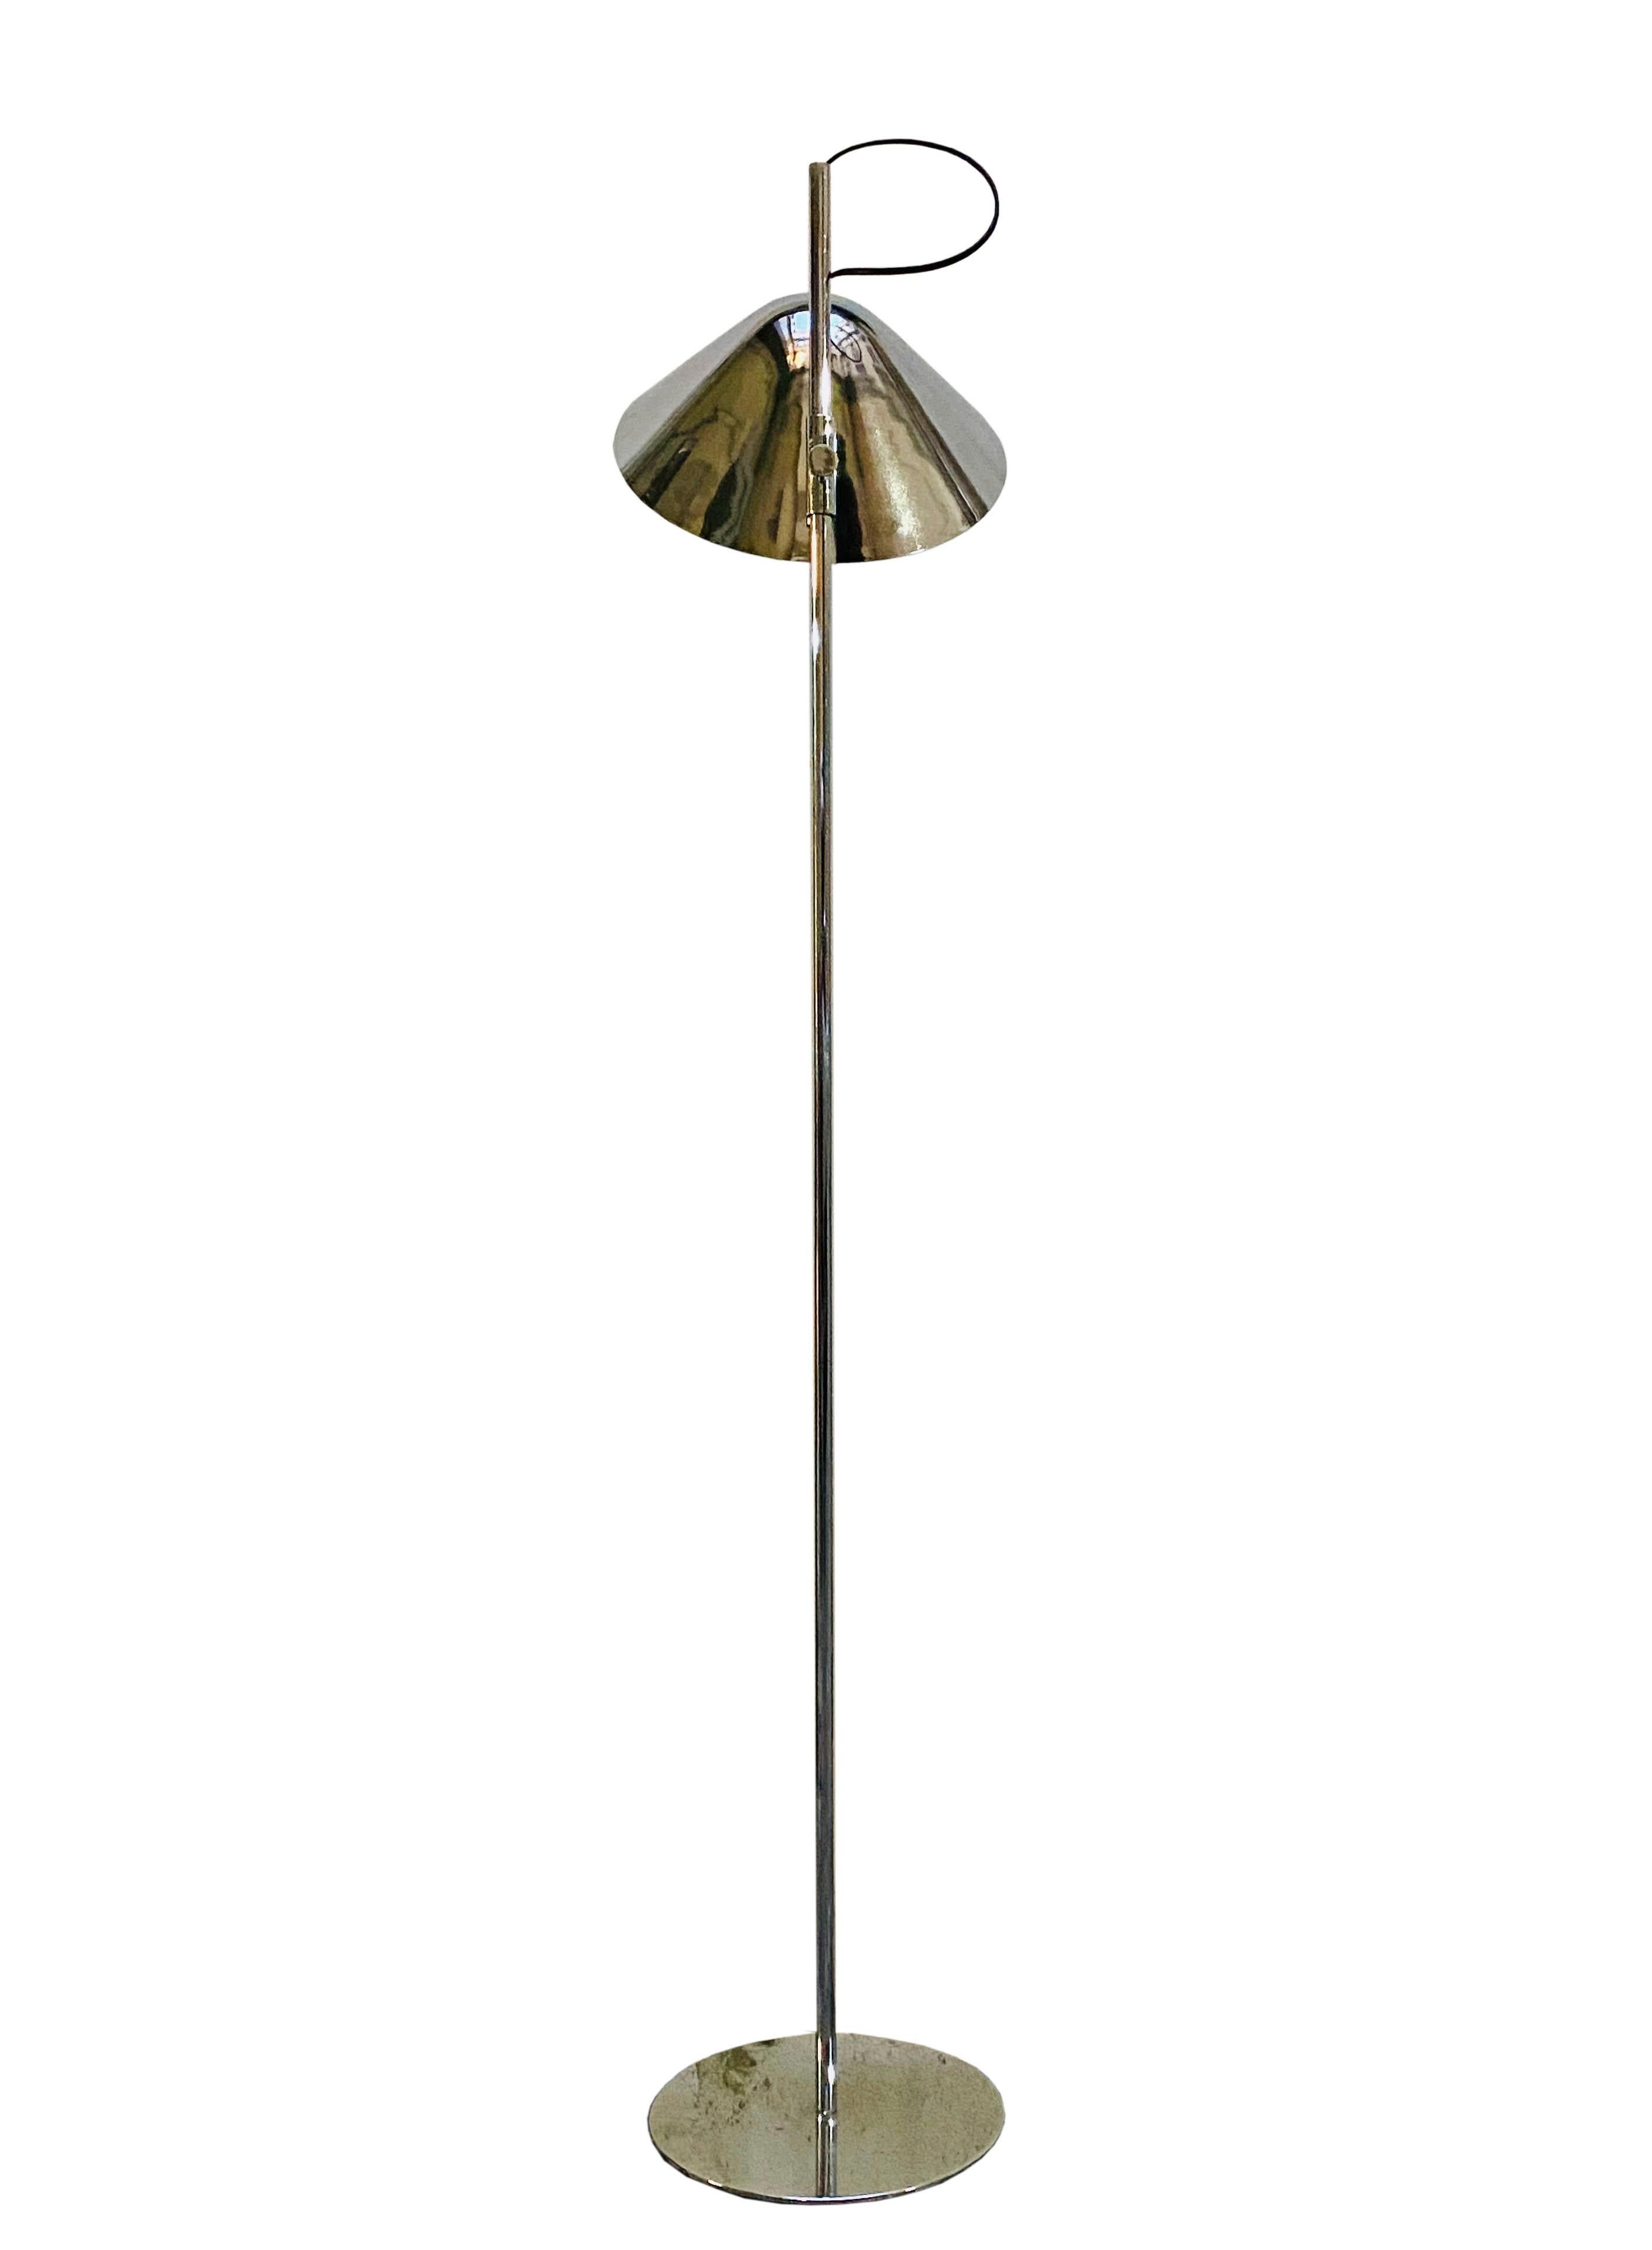 Chromed metal floor lamp by Goffredo Reggiani, 1960.